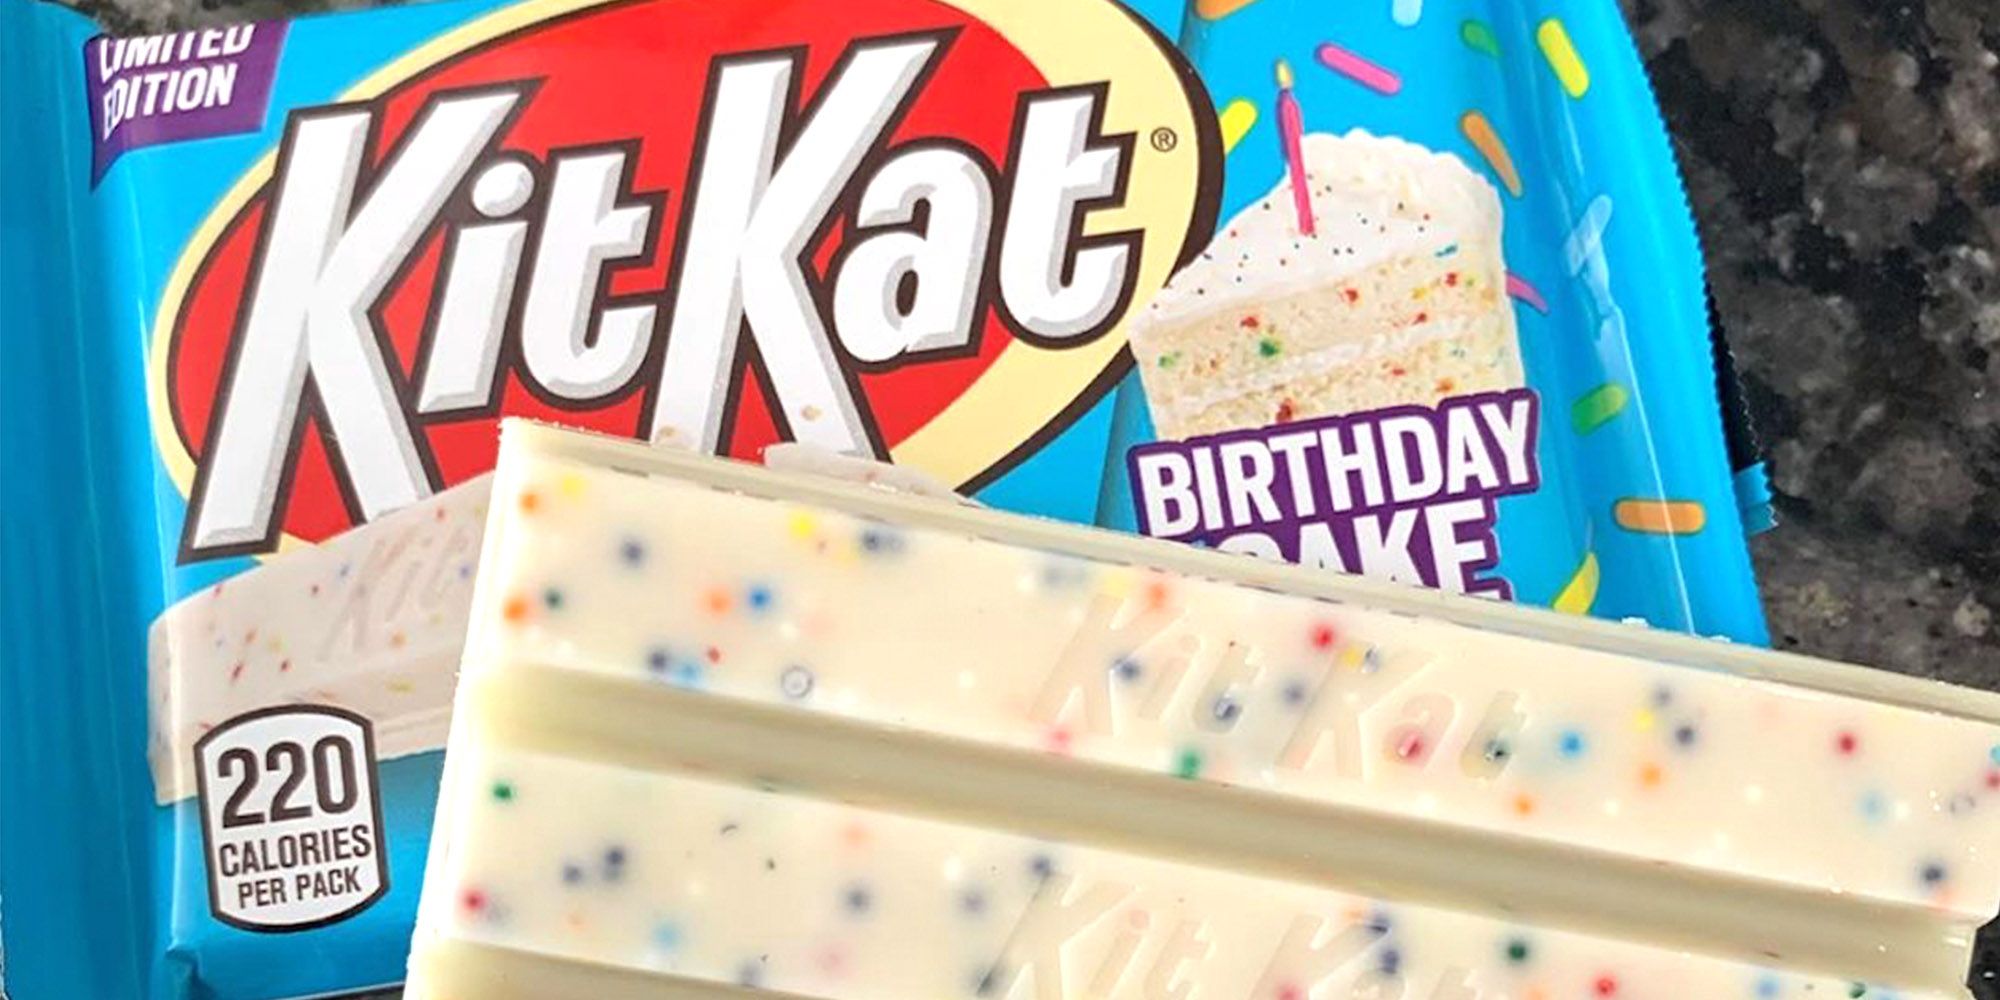 Birthday Kit Kat Cake - The Covet Files